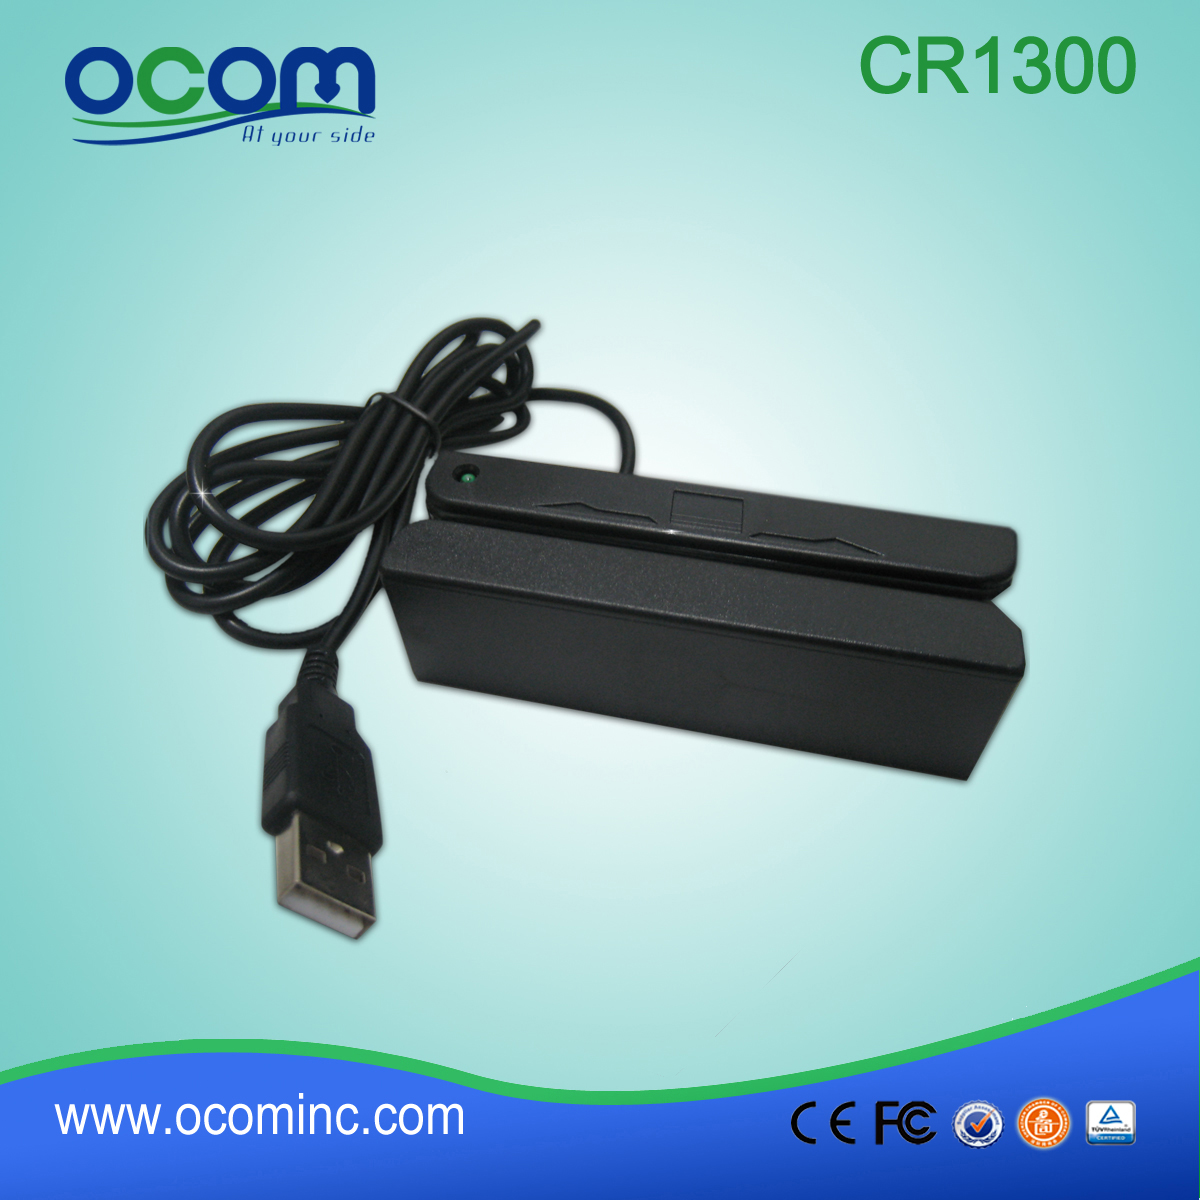 Small magnetic stripe card reader Price,TTL/UART for optional CR1300